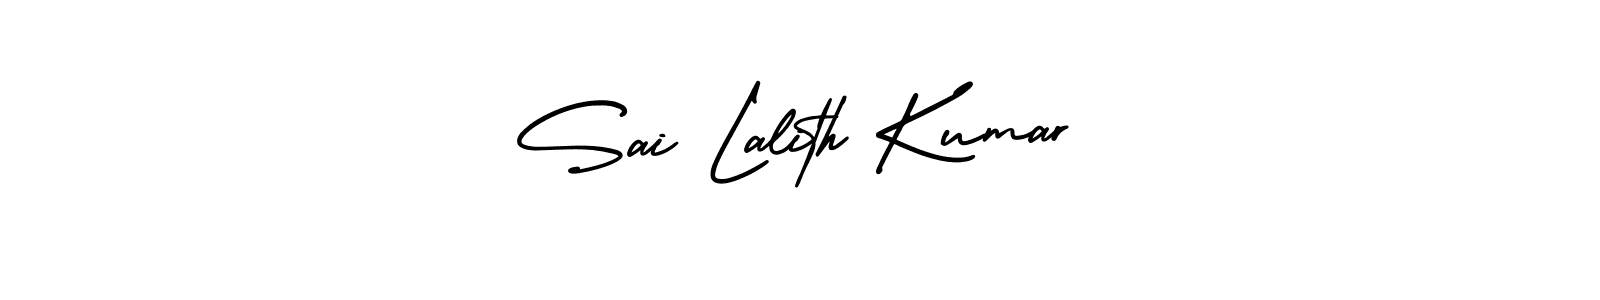 How to Draw Sai Lalith Kumar signature style? AmerikaSignatureDemo-Regular is a latest design signature styles for name Sai Lalith Kumar. Sai Lalith Kumar signature style 3 images and pictures png